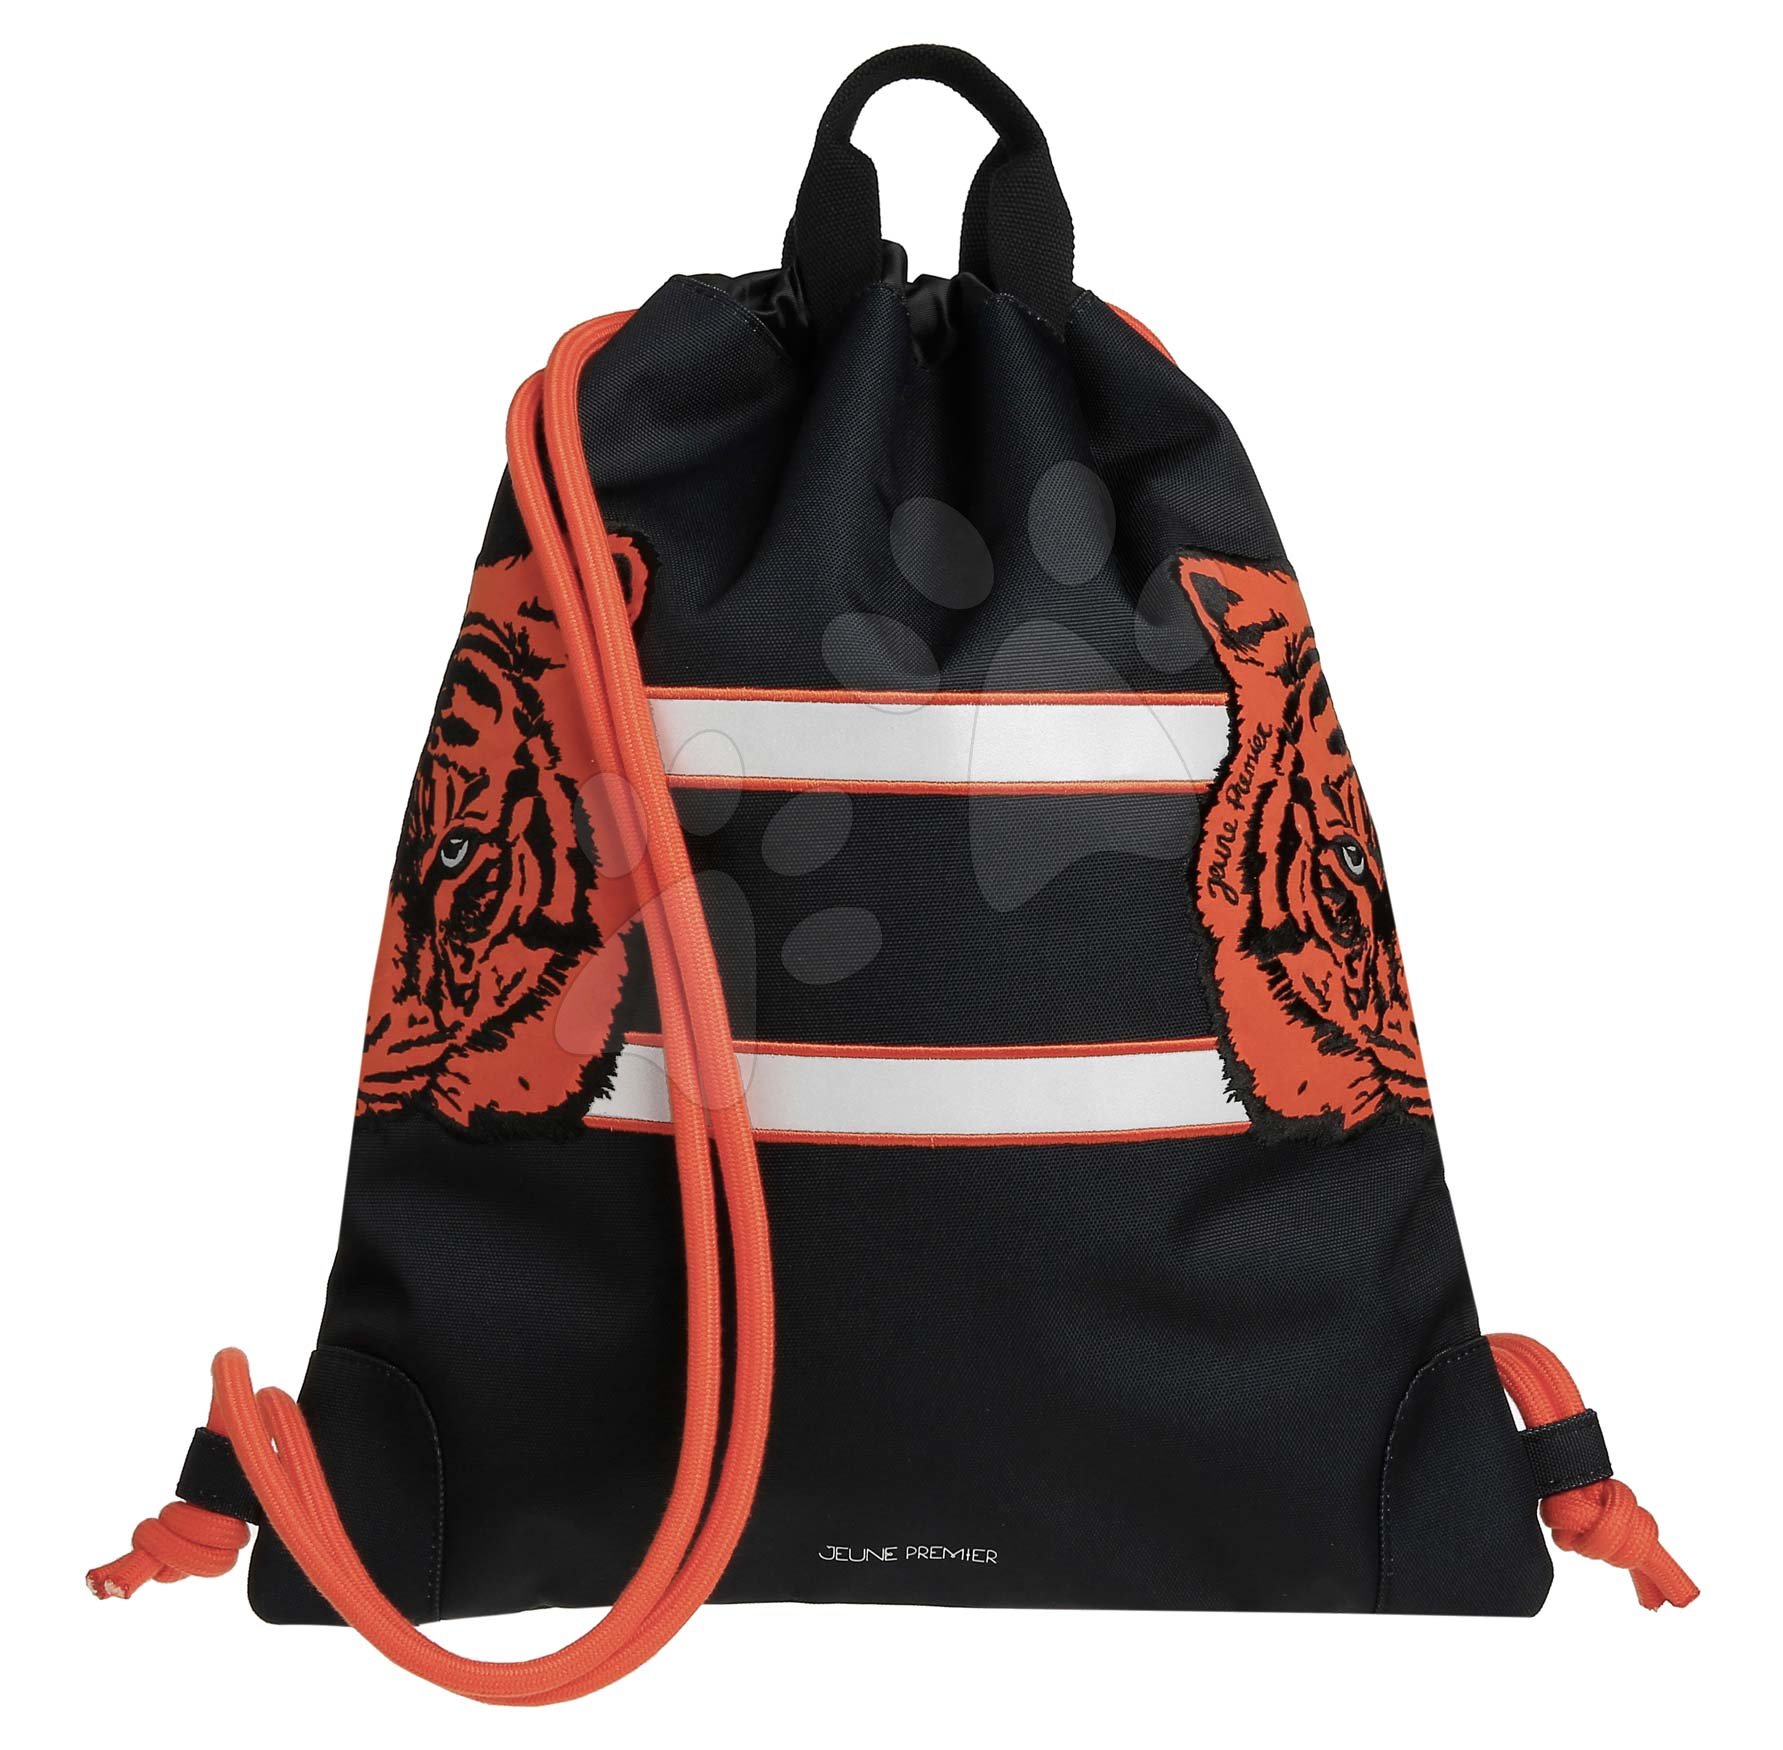 Tornazsák tornaruhára és papucsra City Bag Tiger Twins Jeune Premier ergonomikus luxus kivitel 40*36 cm